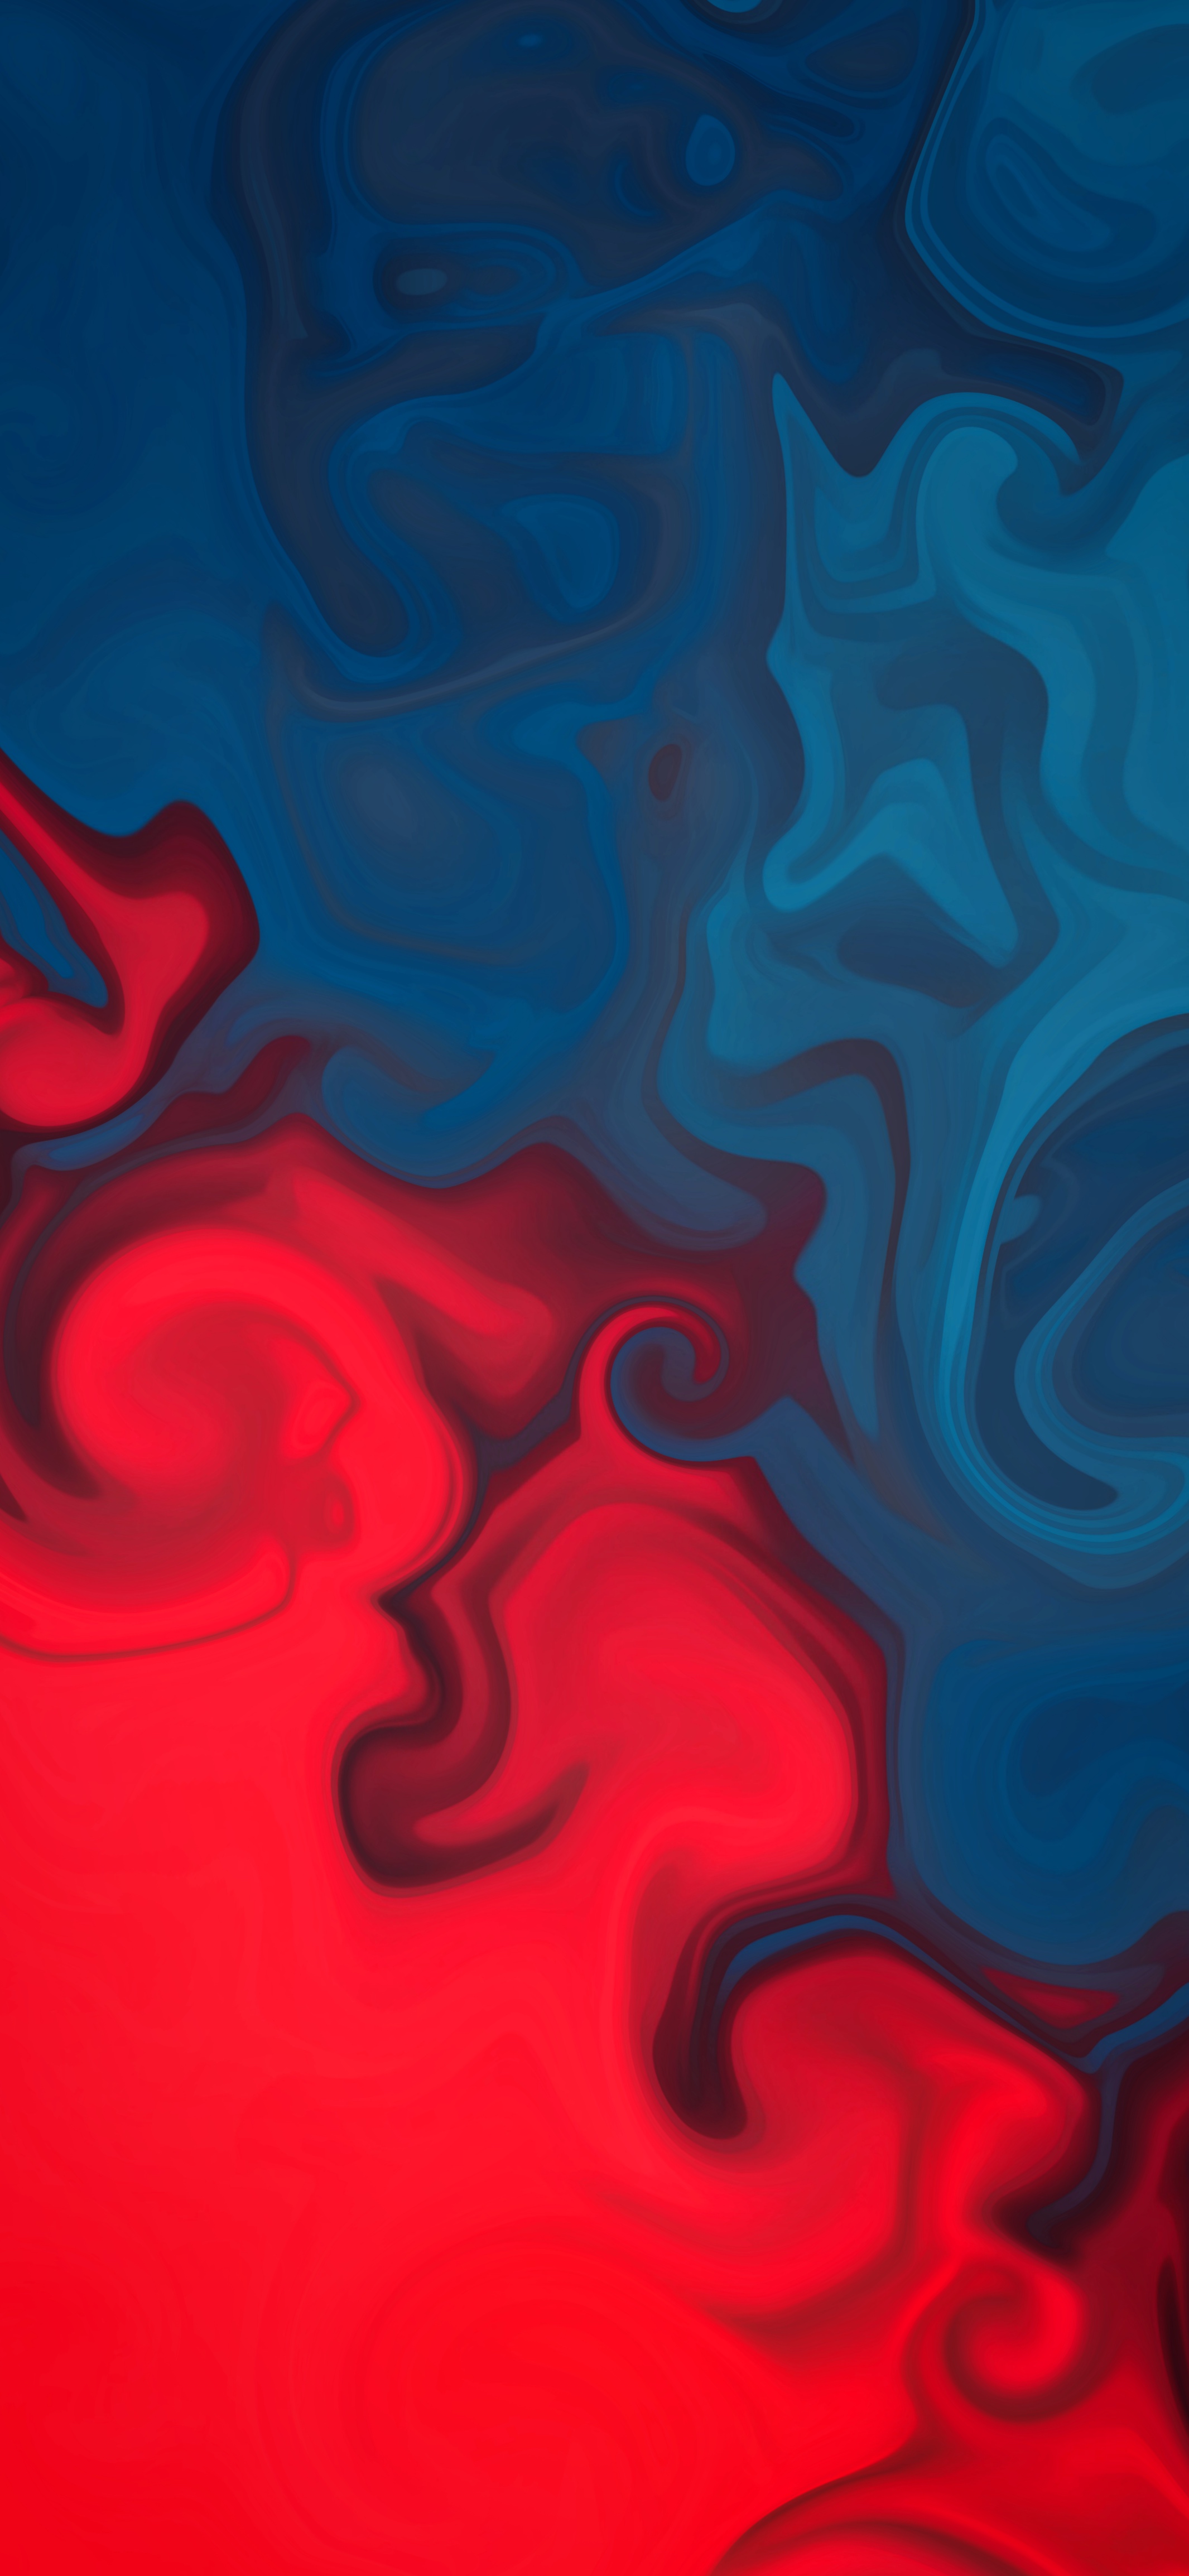 marbleized-iphone-wallpaper-red-blue-swirl-wallsbyjfl